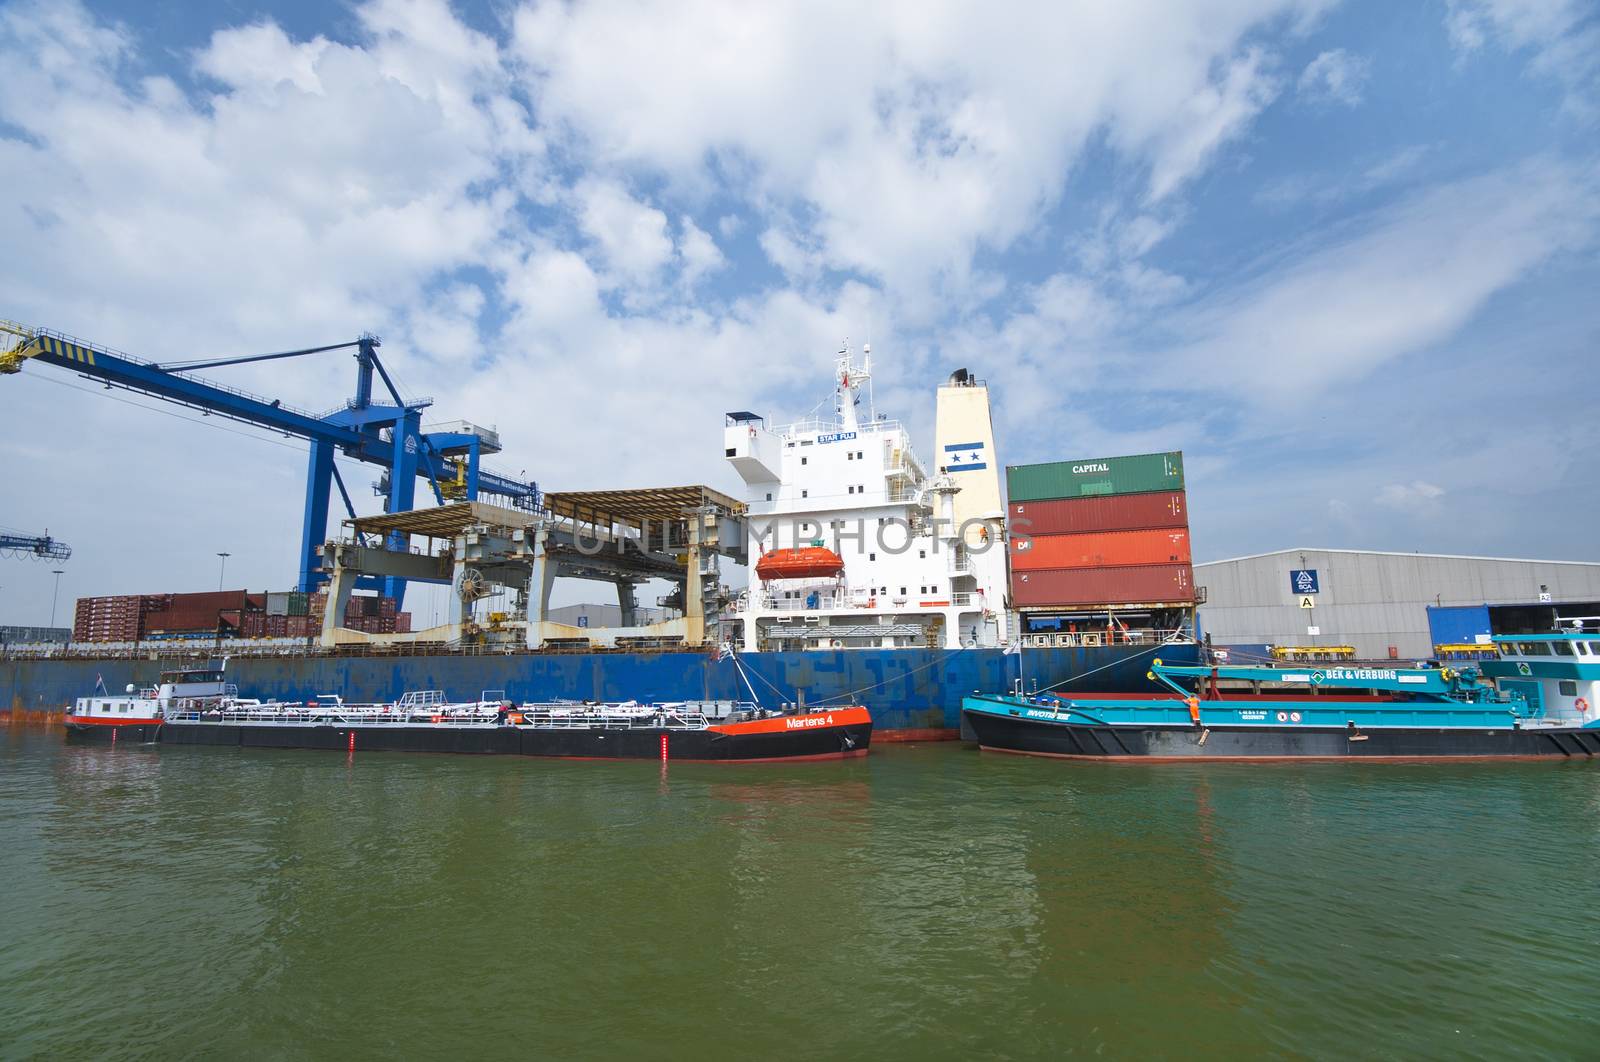 Gigantic crane at the port dock of Rotterdam